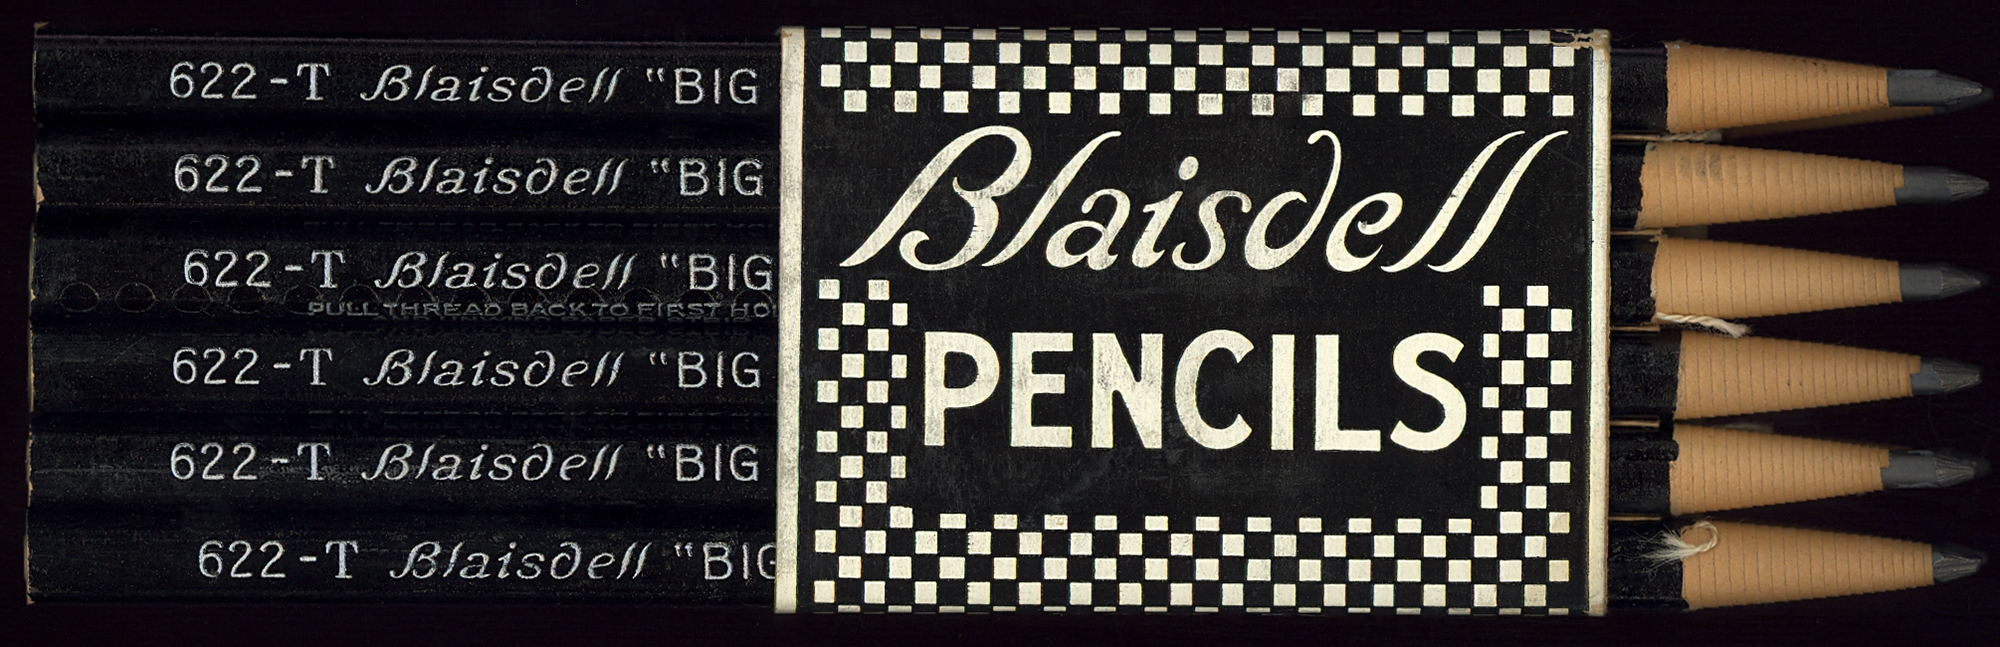 Big Black Pencil - University of Fashion